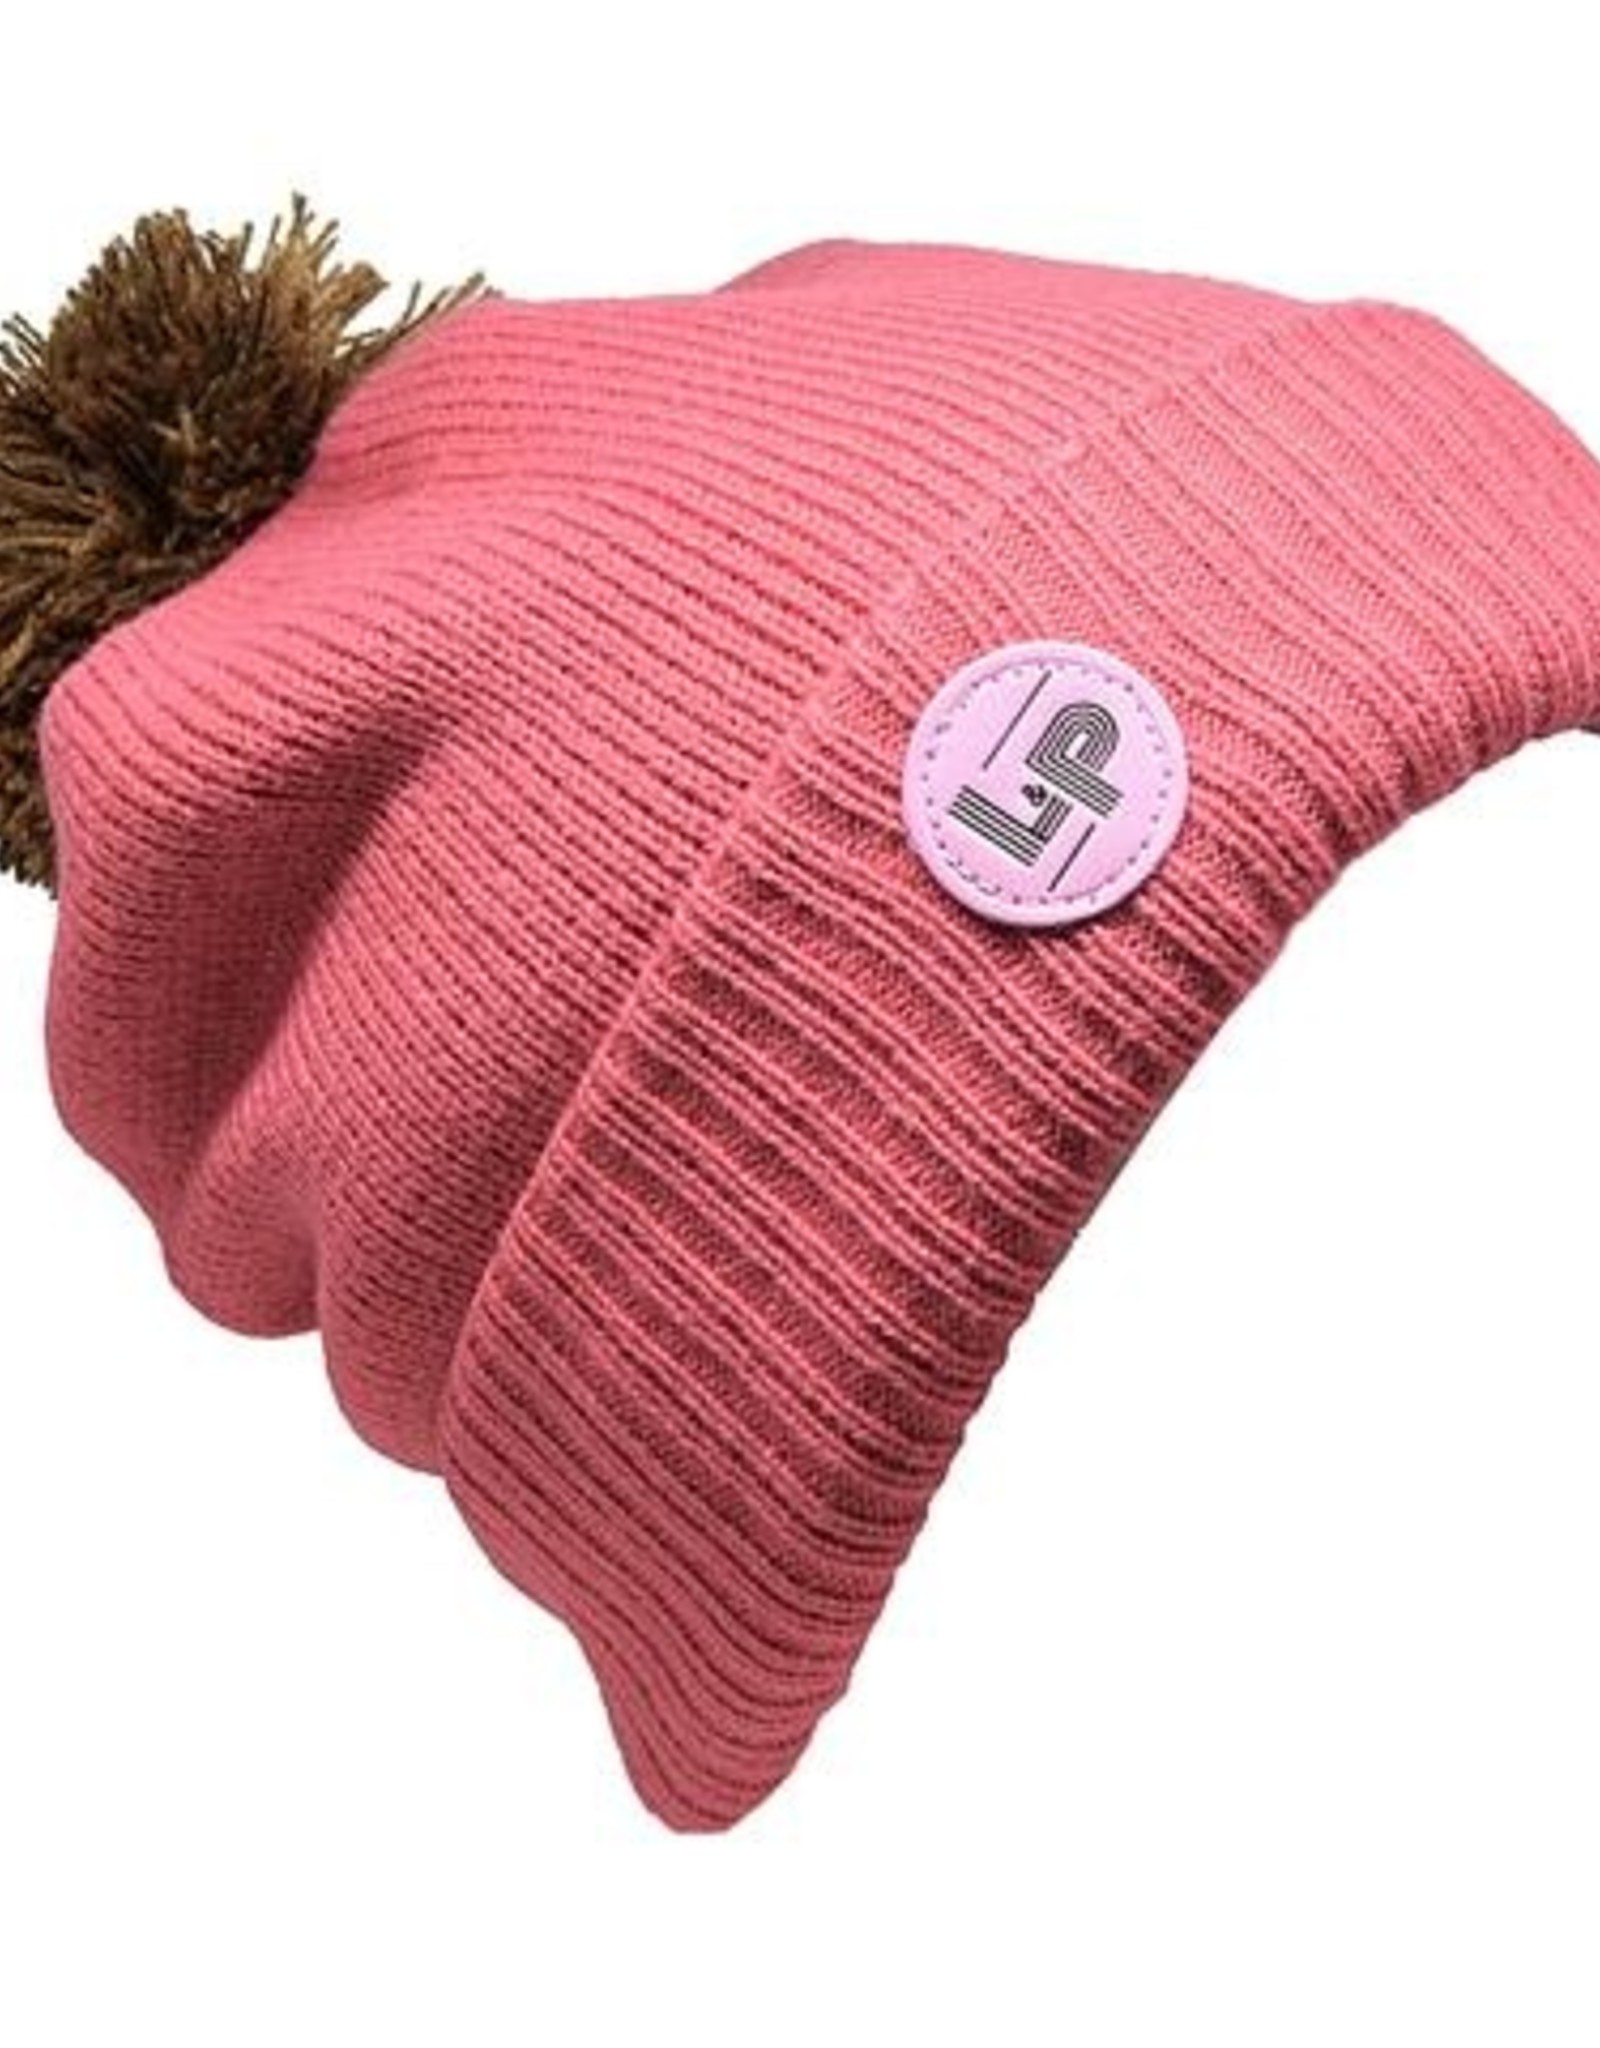 L & P - Bobble Knit Hat - Whistler